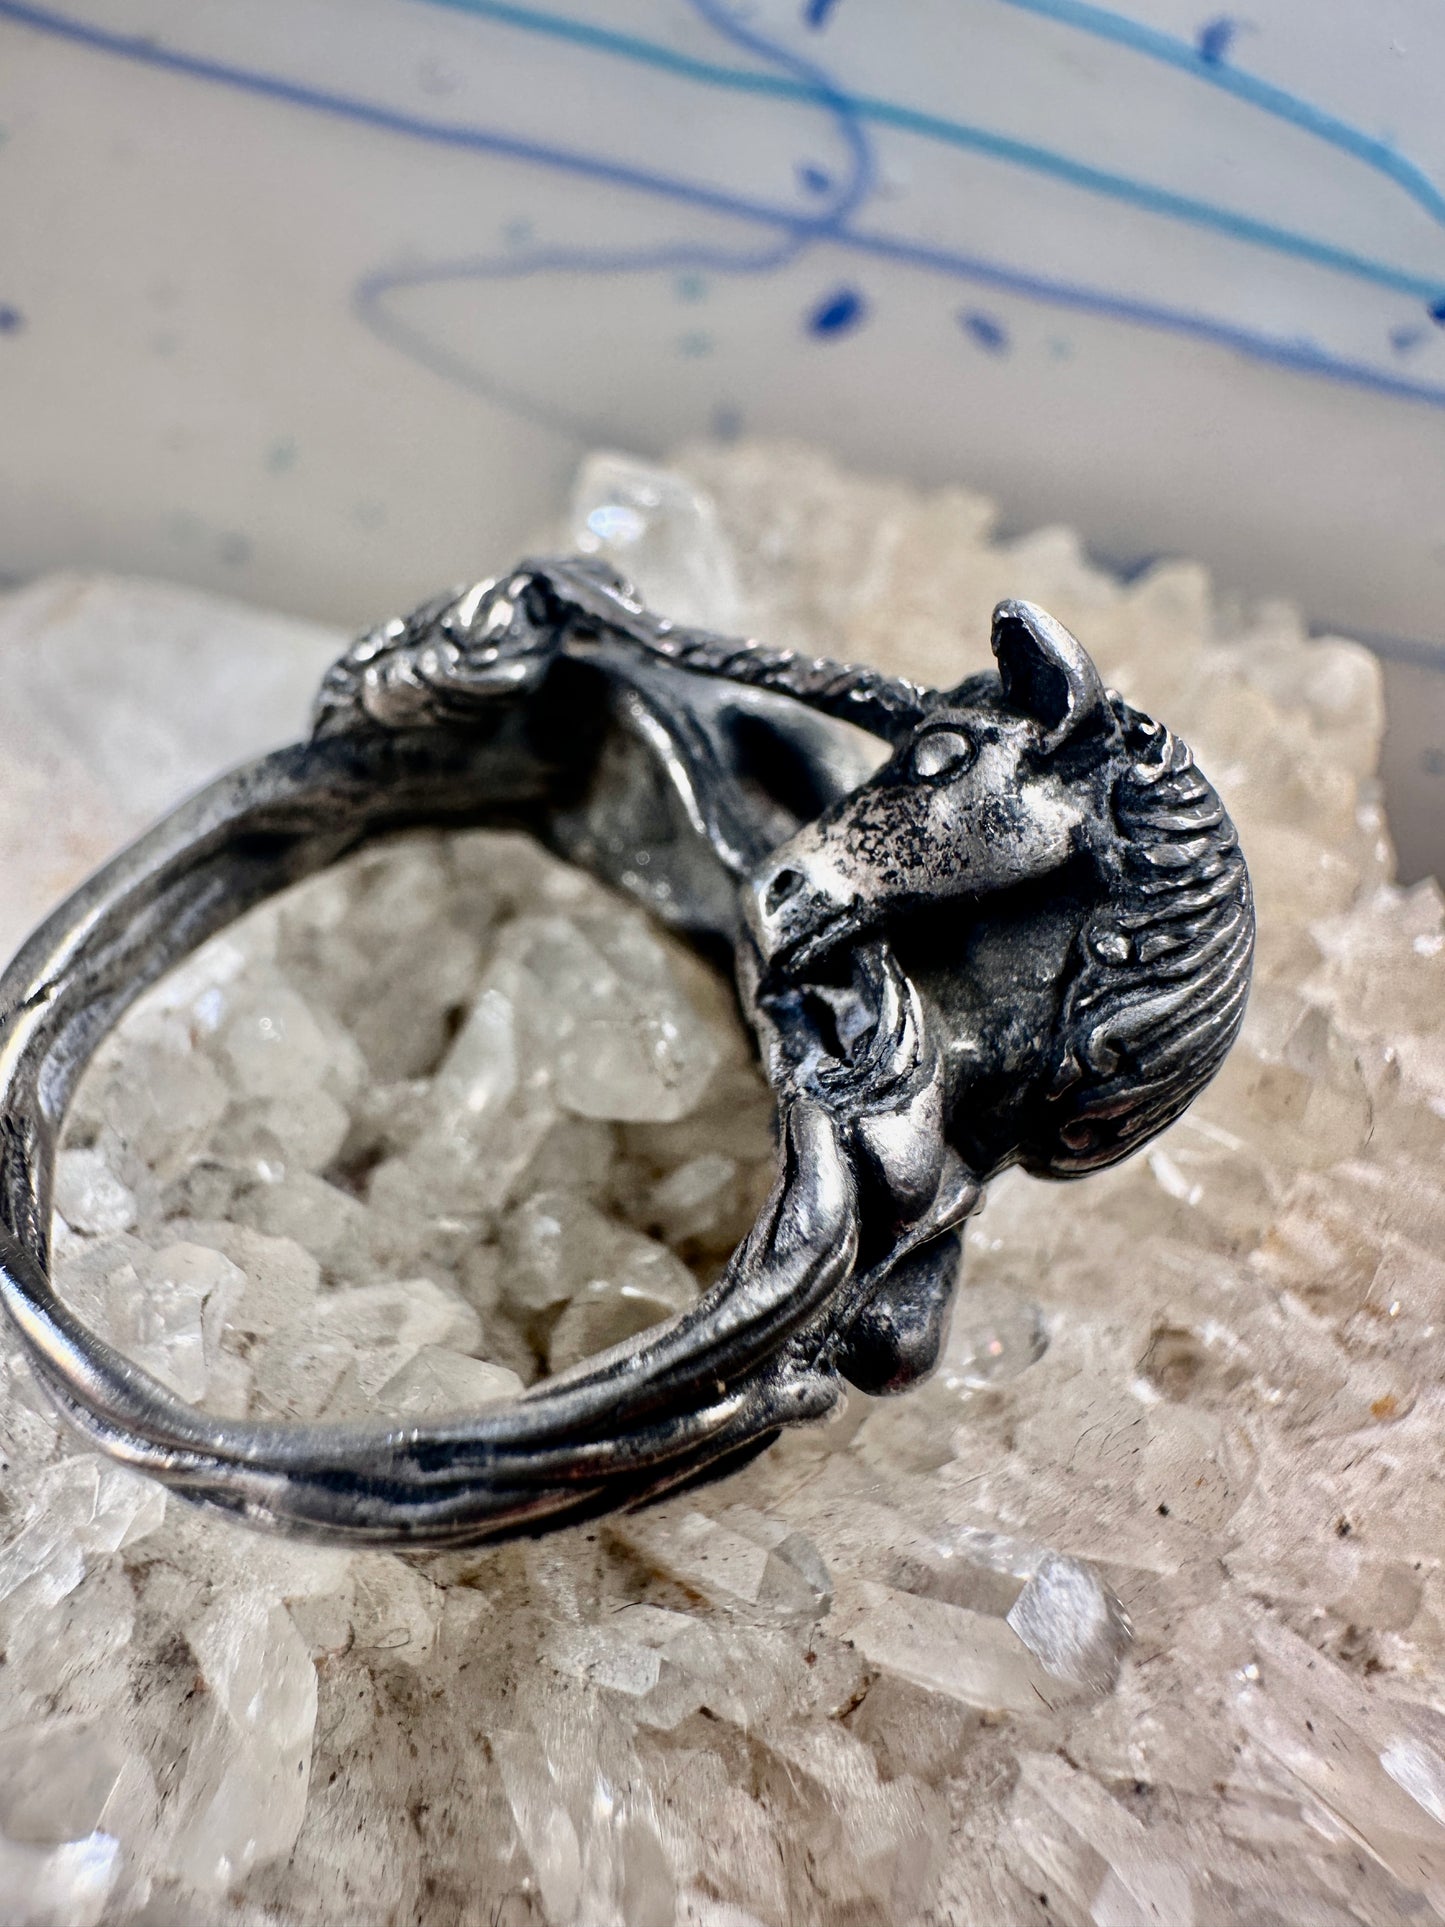 Unicorn ring James Yesberger size 7 horse w horn sterling silver women